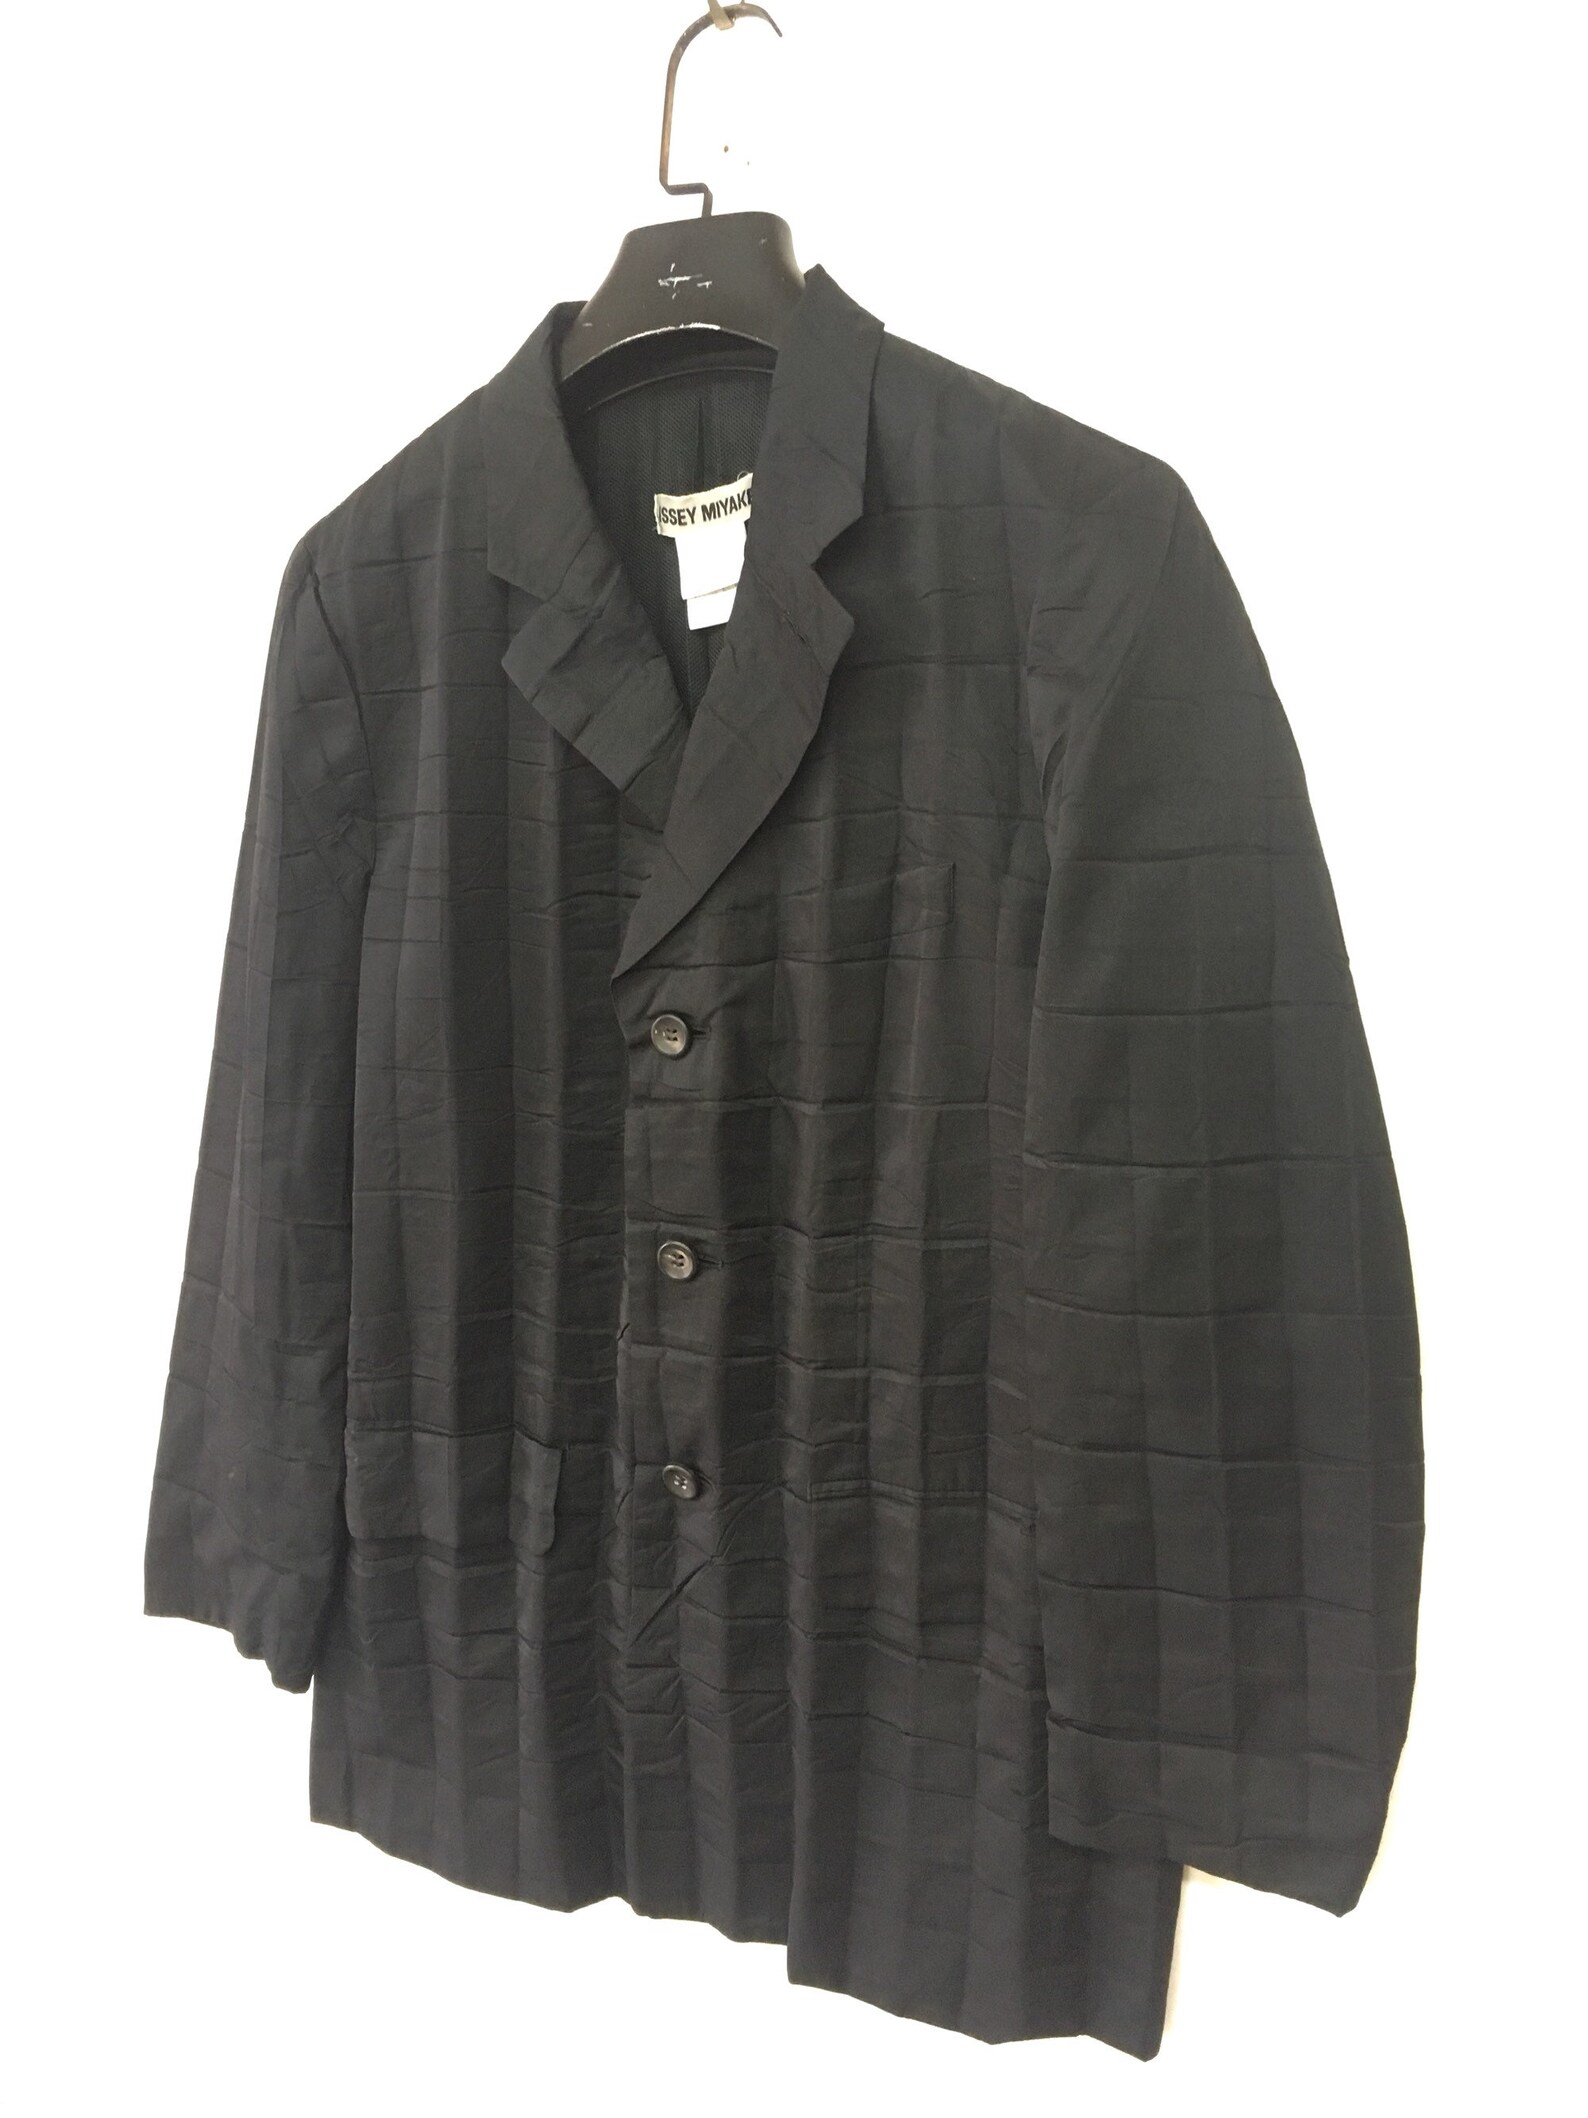 Rare Issey Miyake wrinkle square pattern blazer japanese high | Etsy